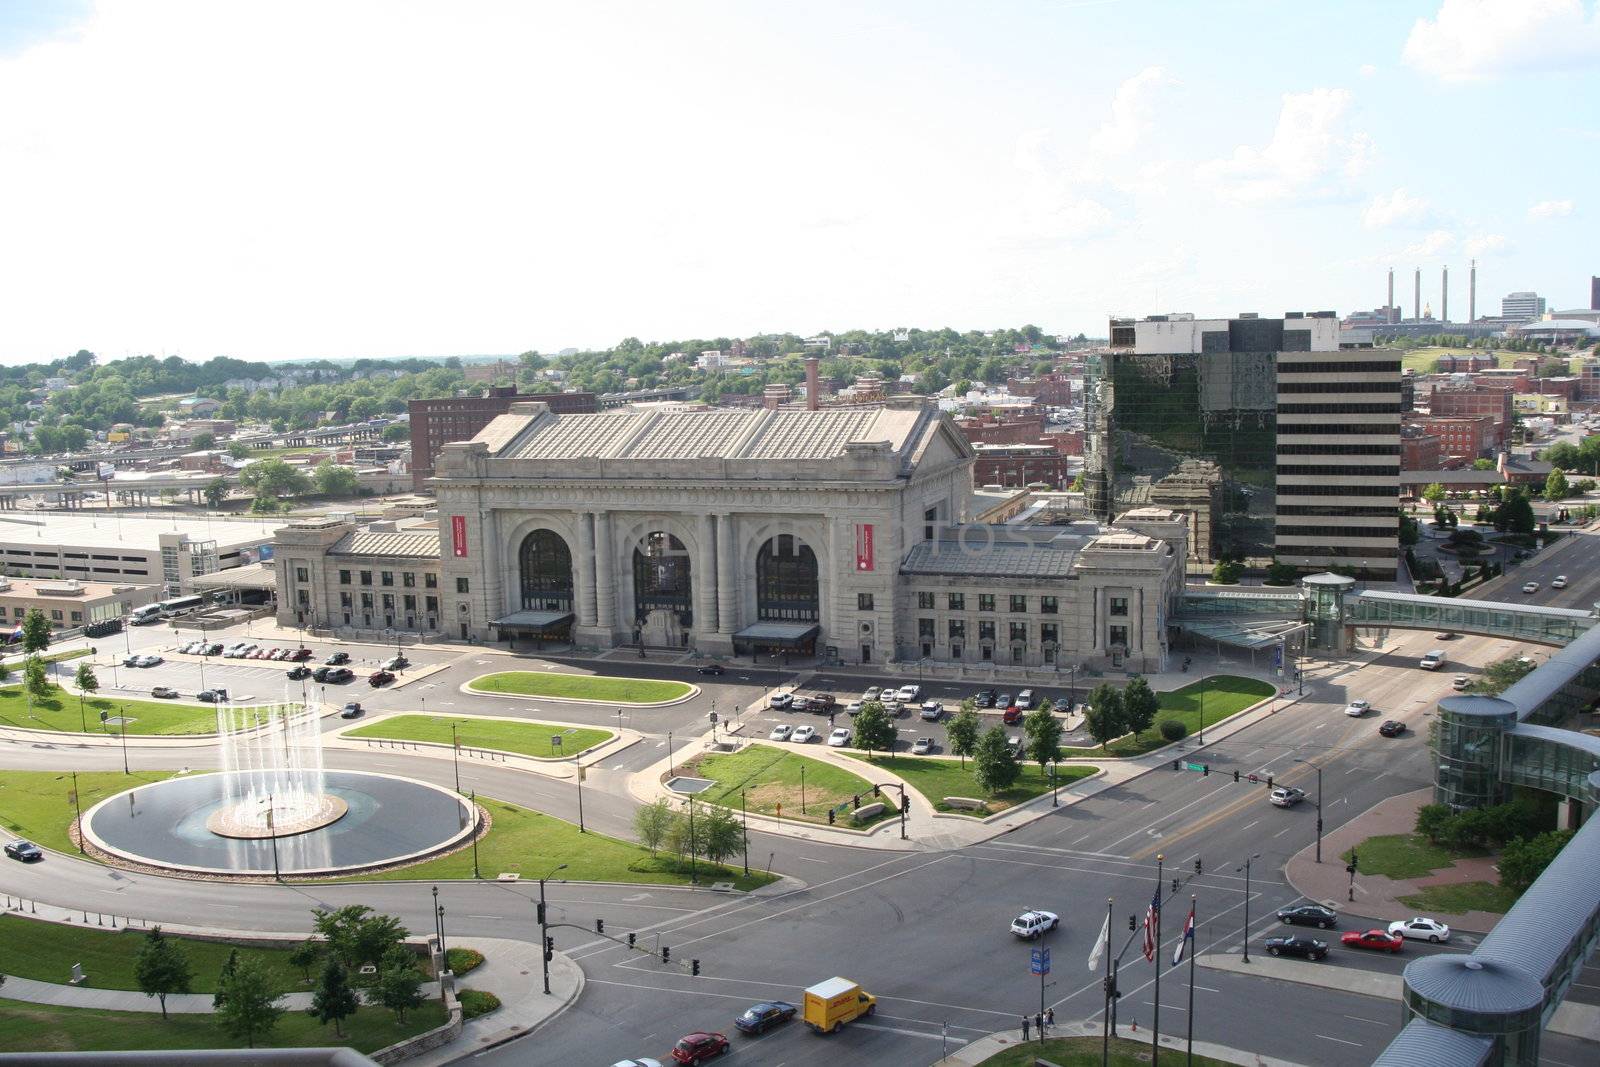 Kansas City Union Station by ronlan